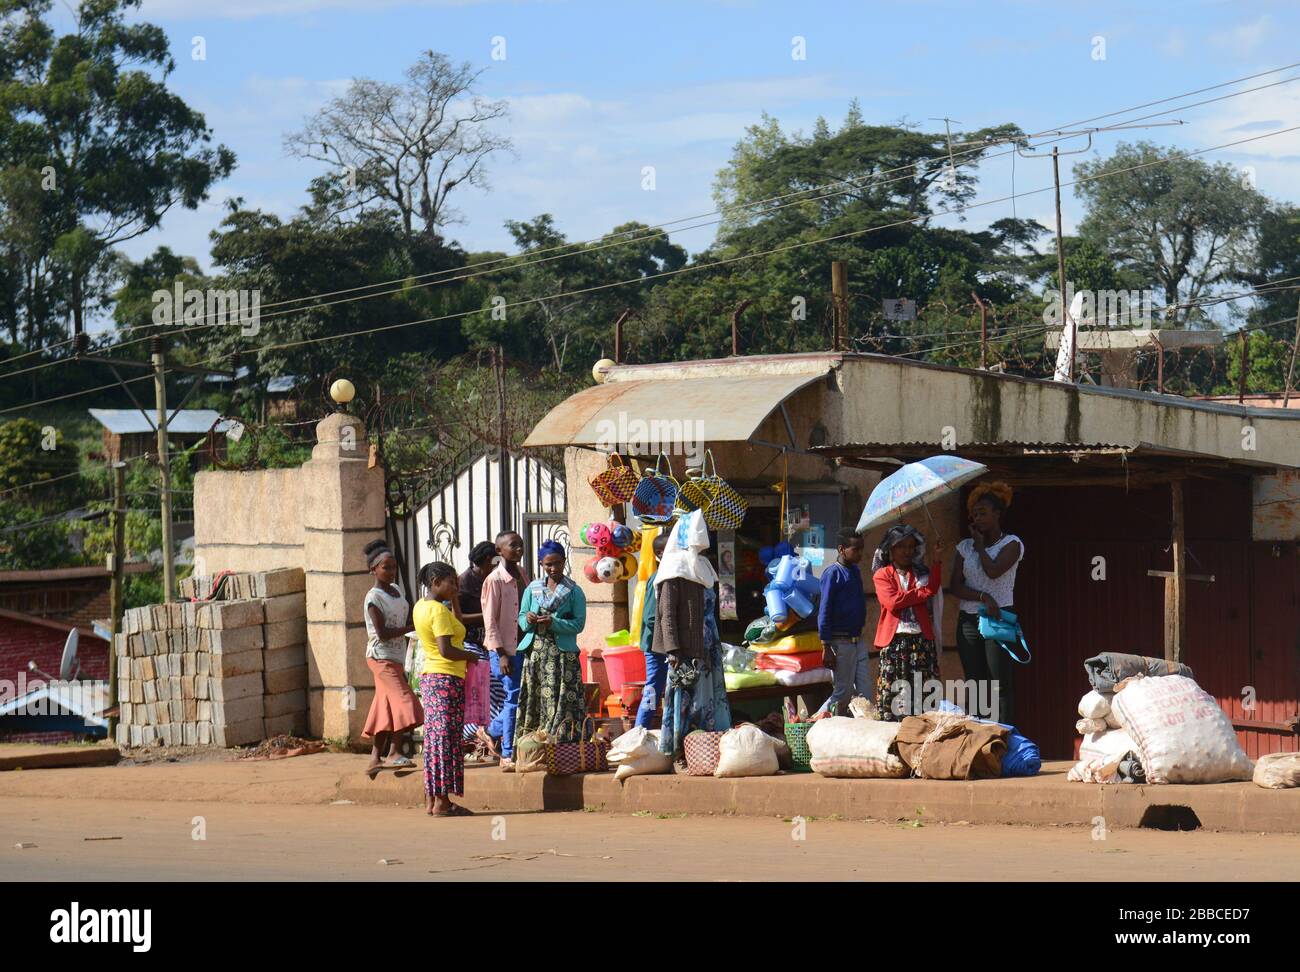 Market scene in Wush-Wush, Ethiopia. Stock Photo